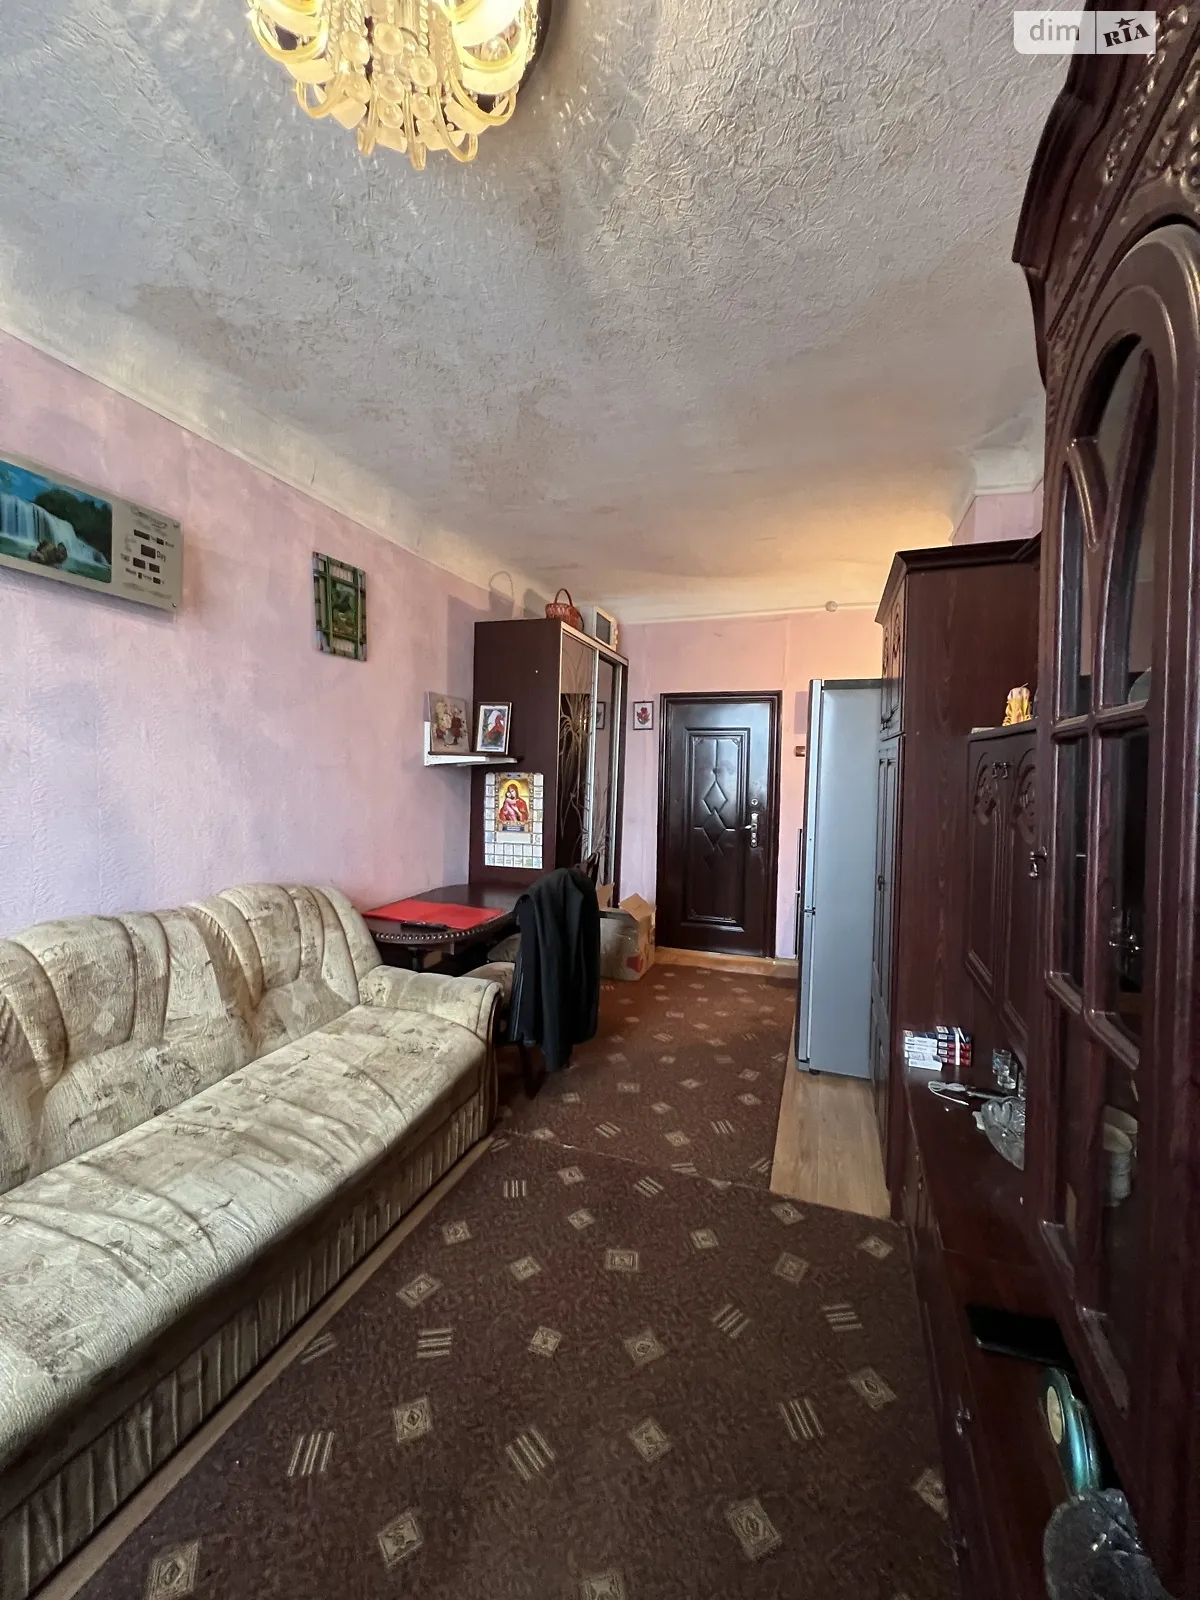 Продается комната 27 кв. м в Харькове - фото 2